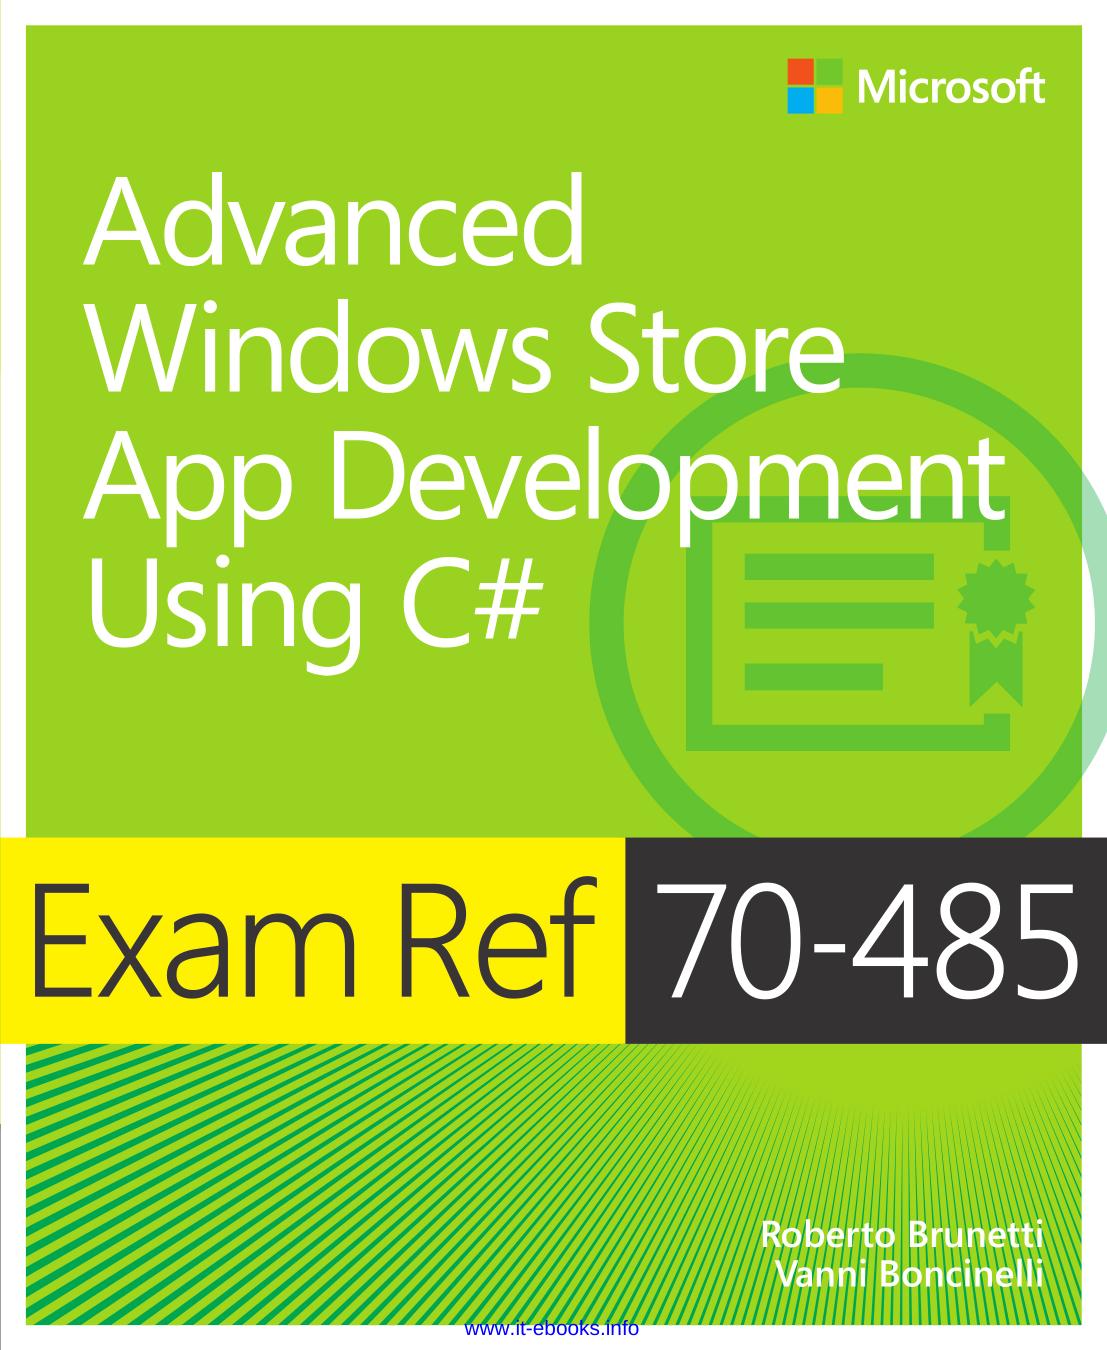 Exam Ref 70-485: Advanced Windows Store App Development Using C# by Roberto Brunetti & Vanni Boncinelli